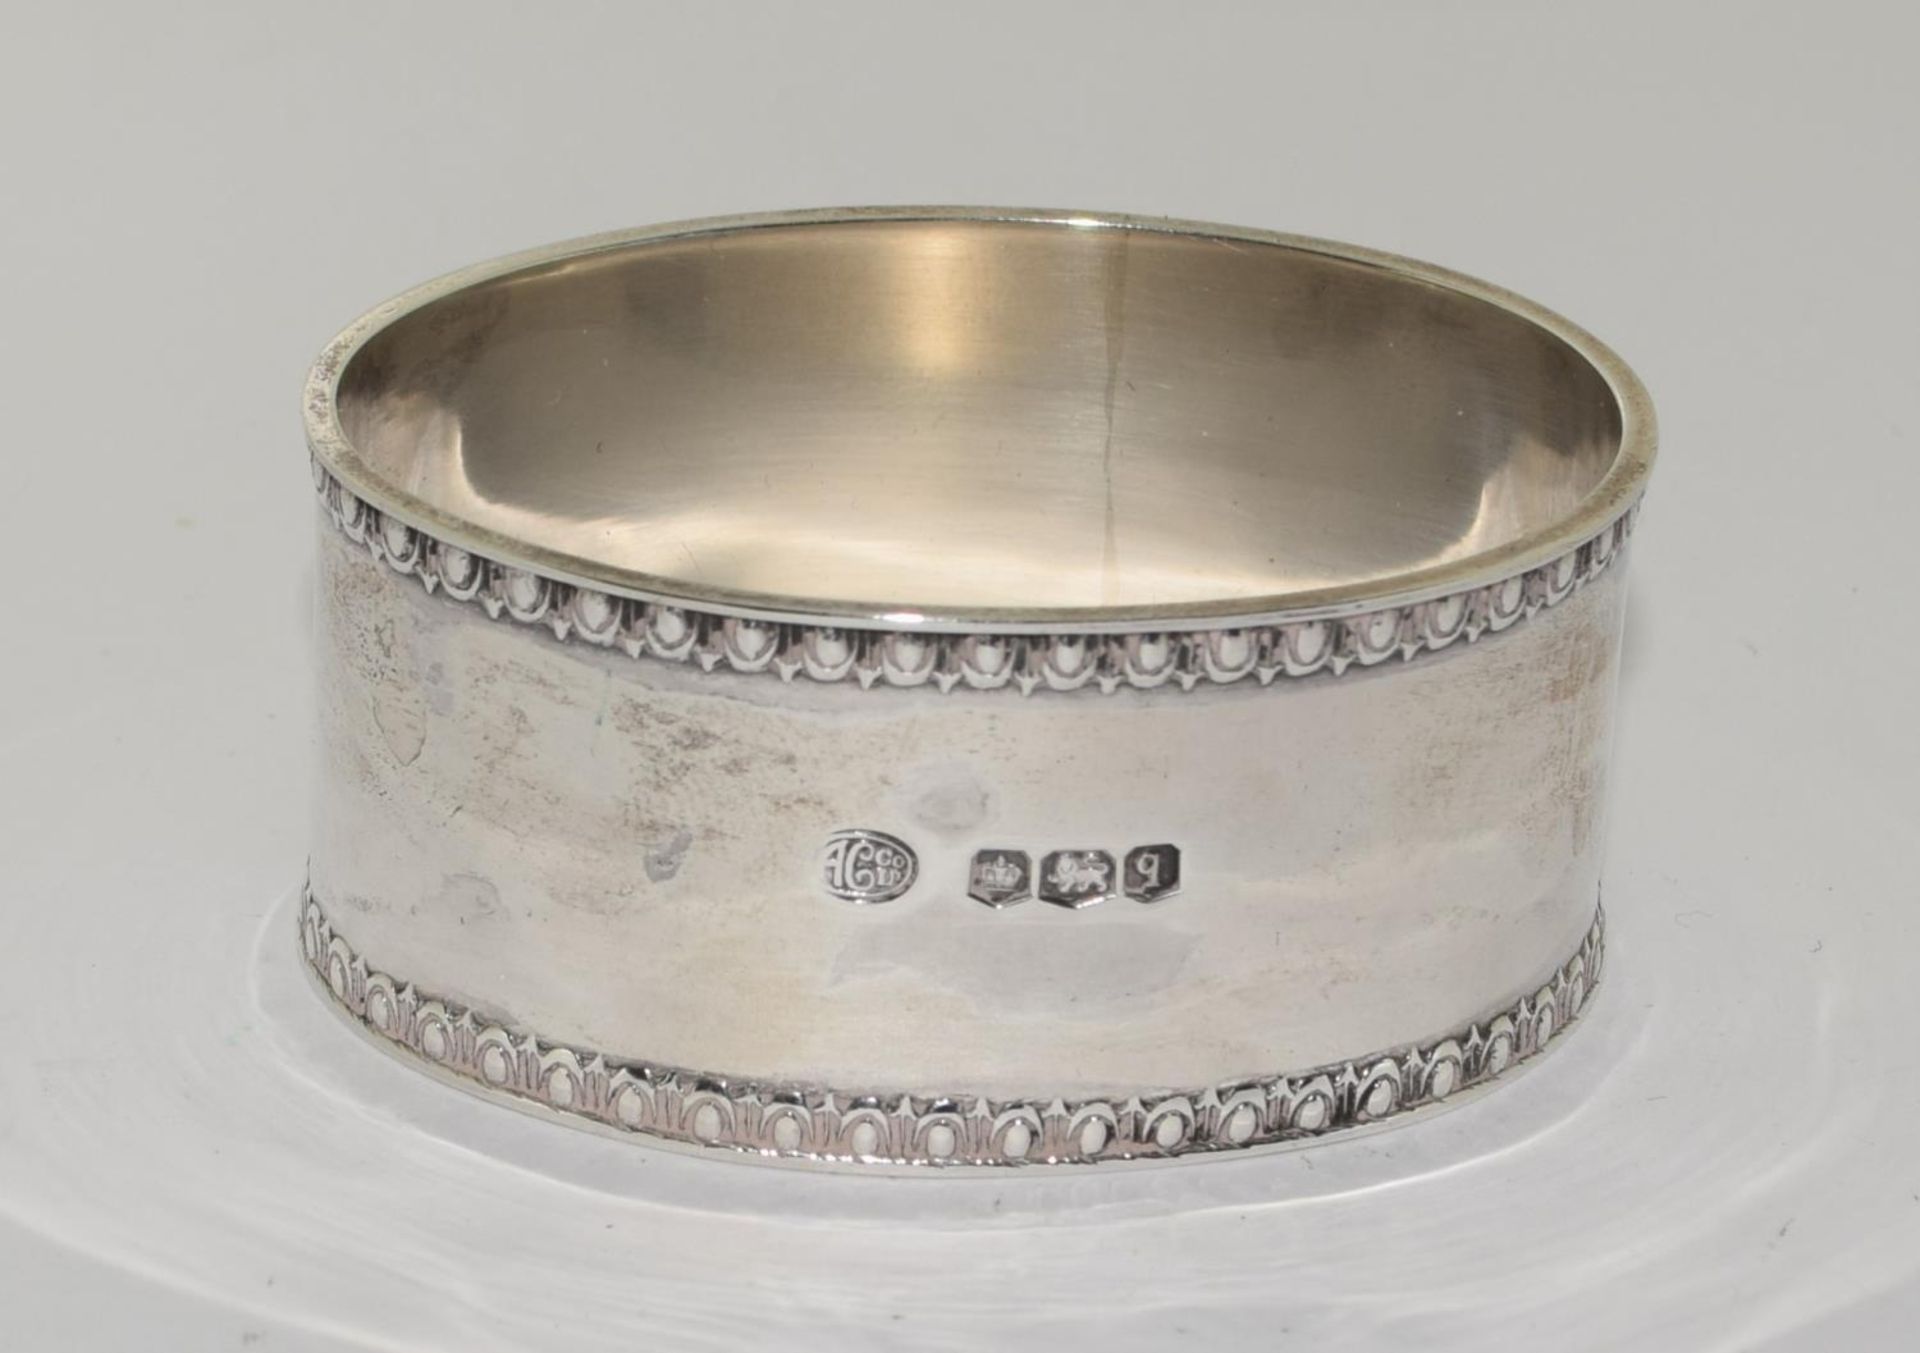 Silver Nap Kin ring in original presentation box - Image 2 of 5